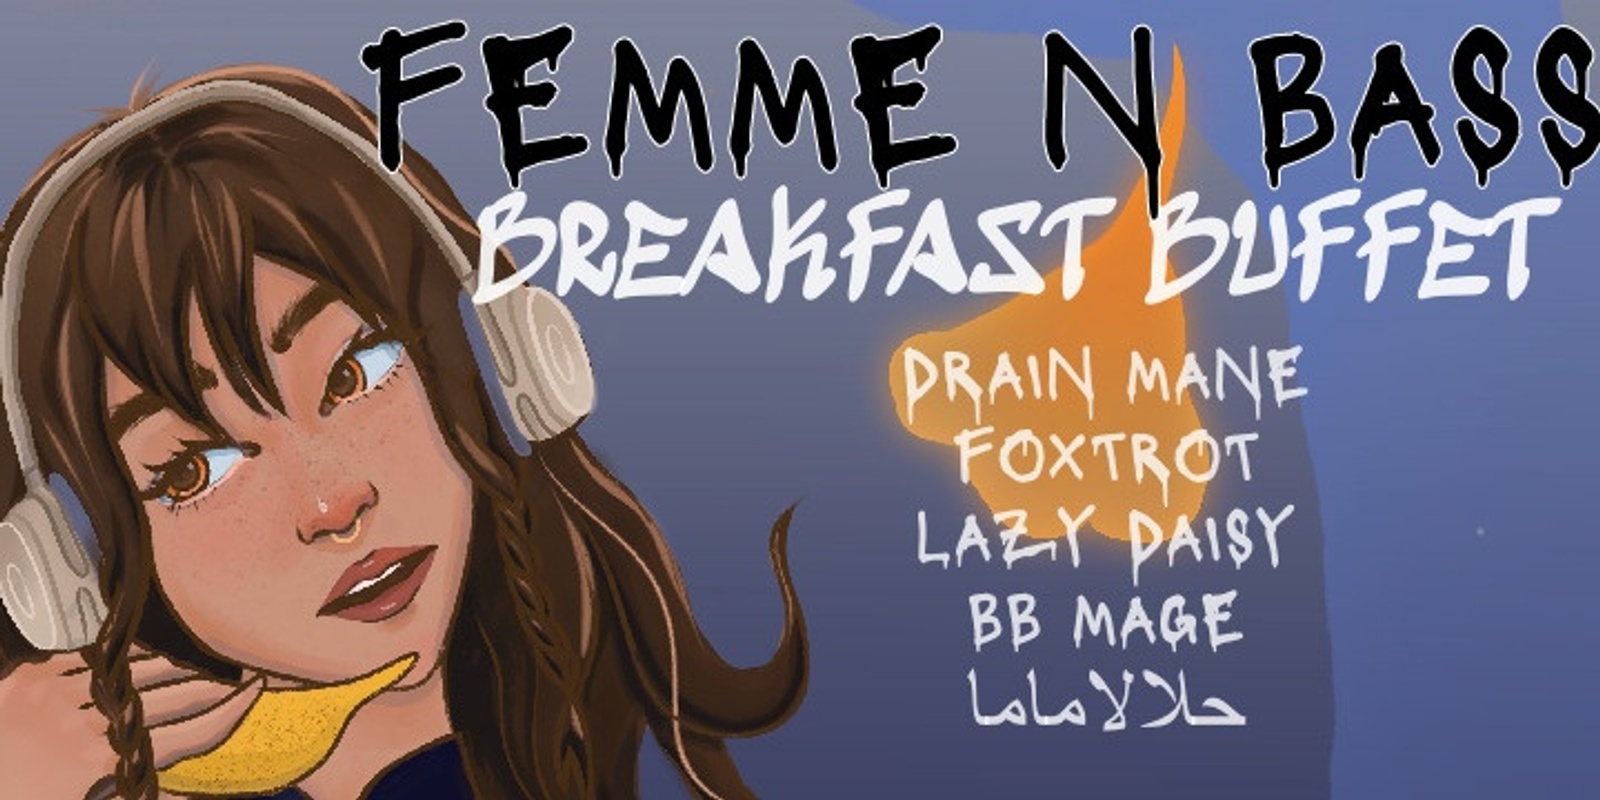 Banner image for Femme n Bass Presents: Breakfast Buffet